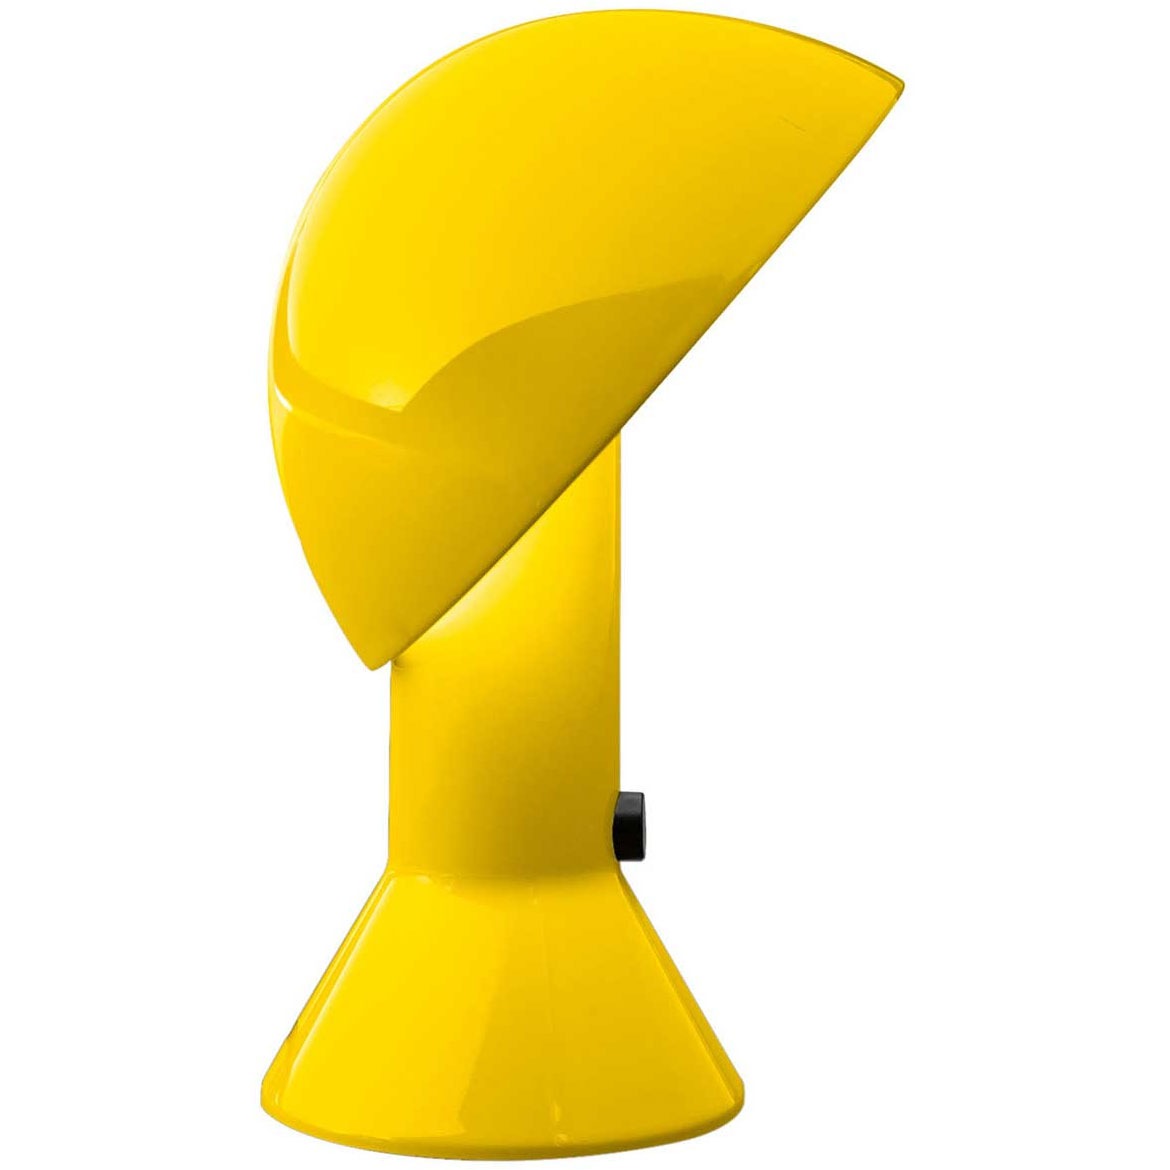 Elmetto Table Lamp, Yellow